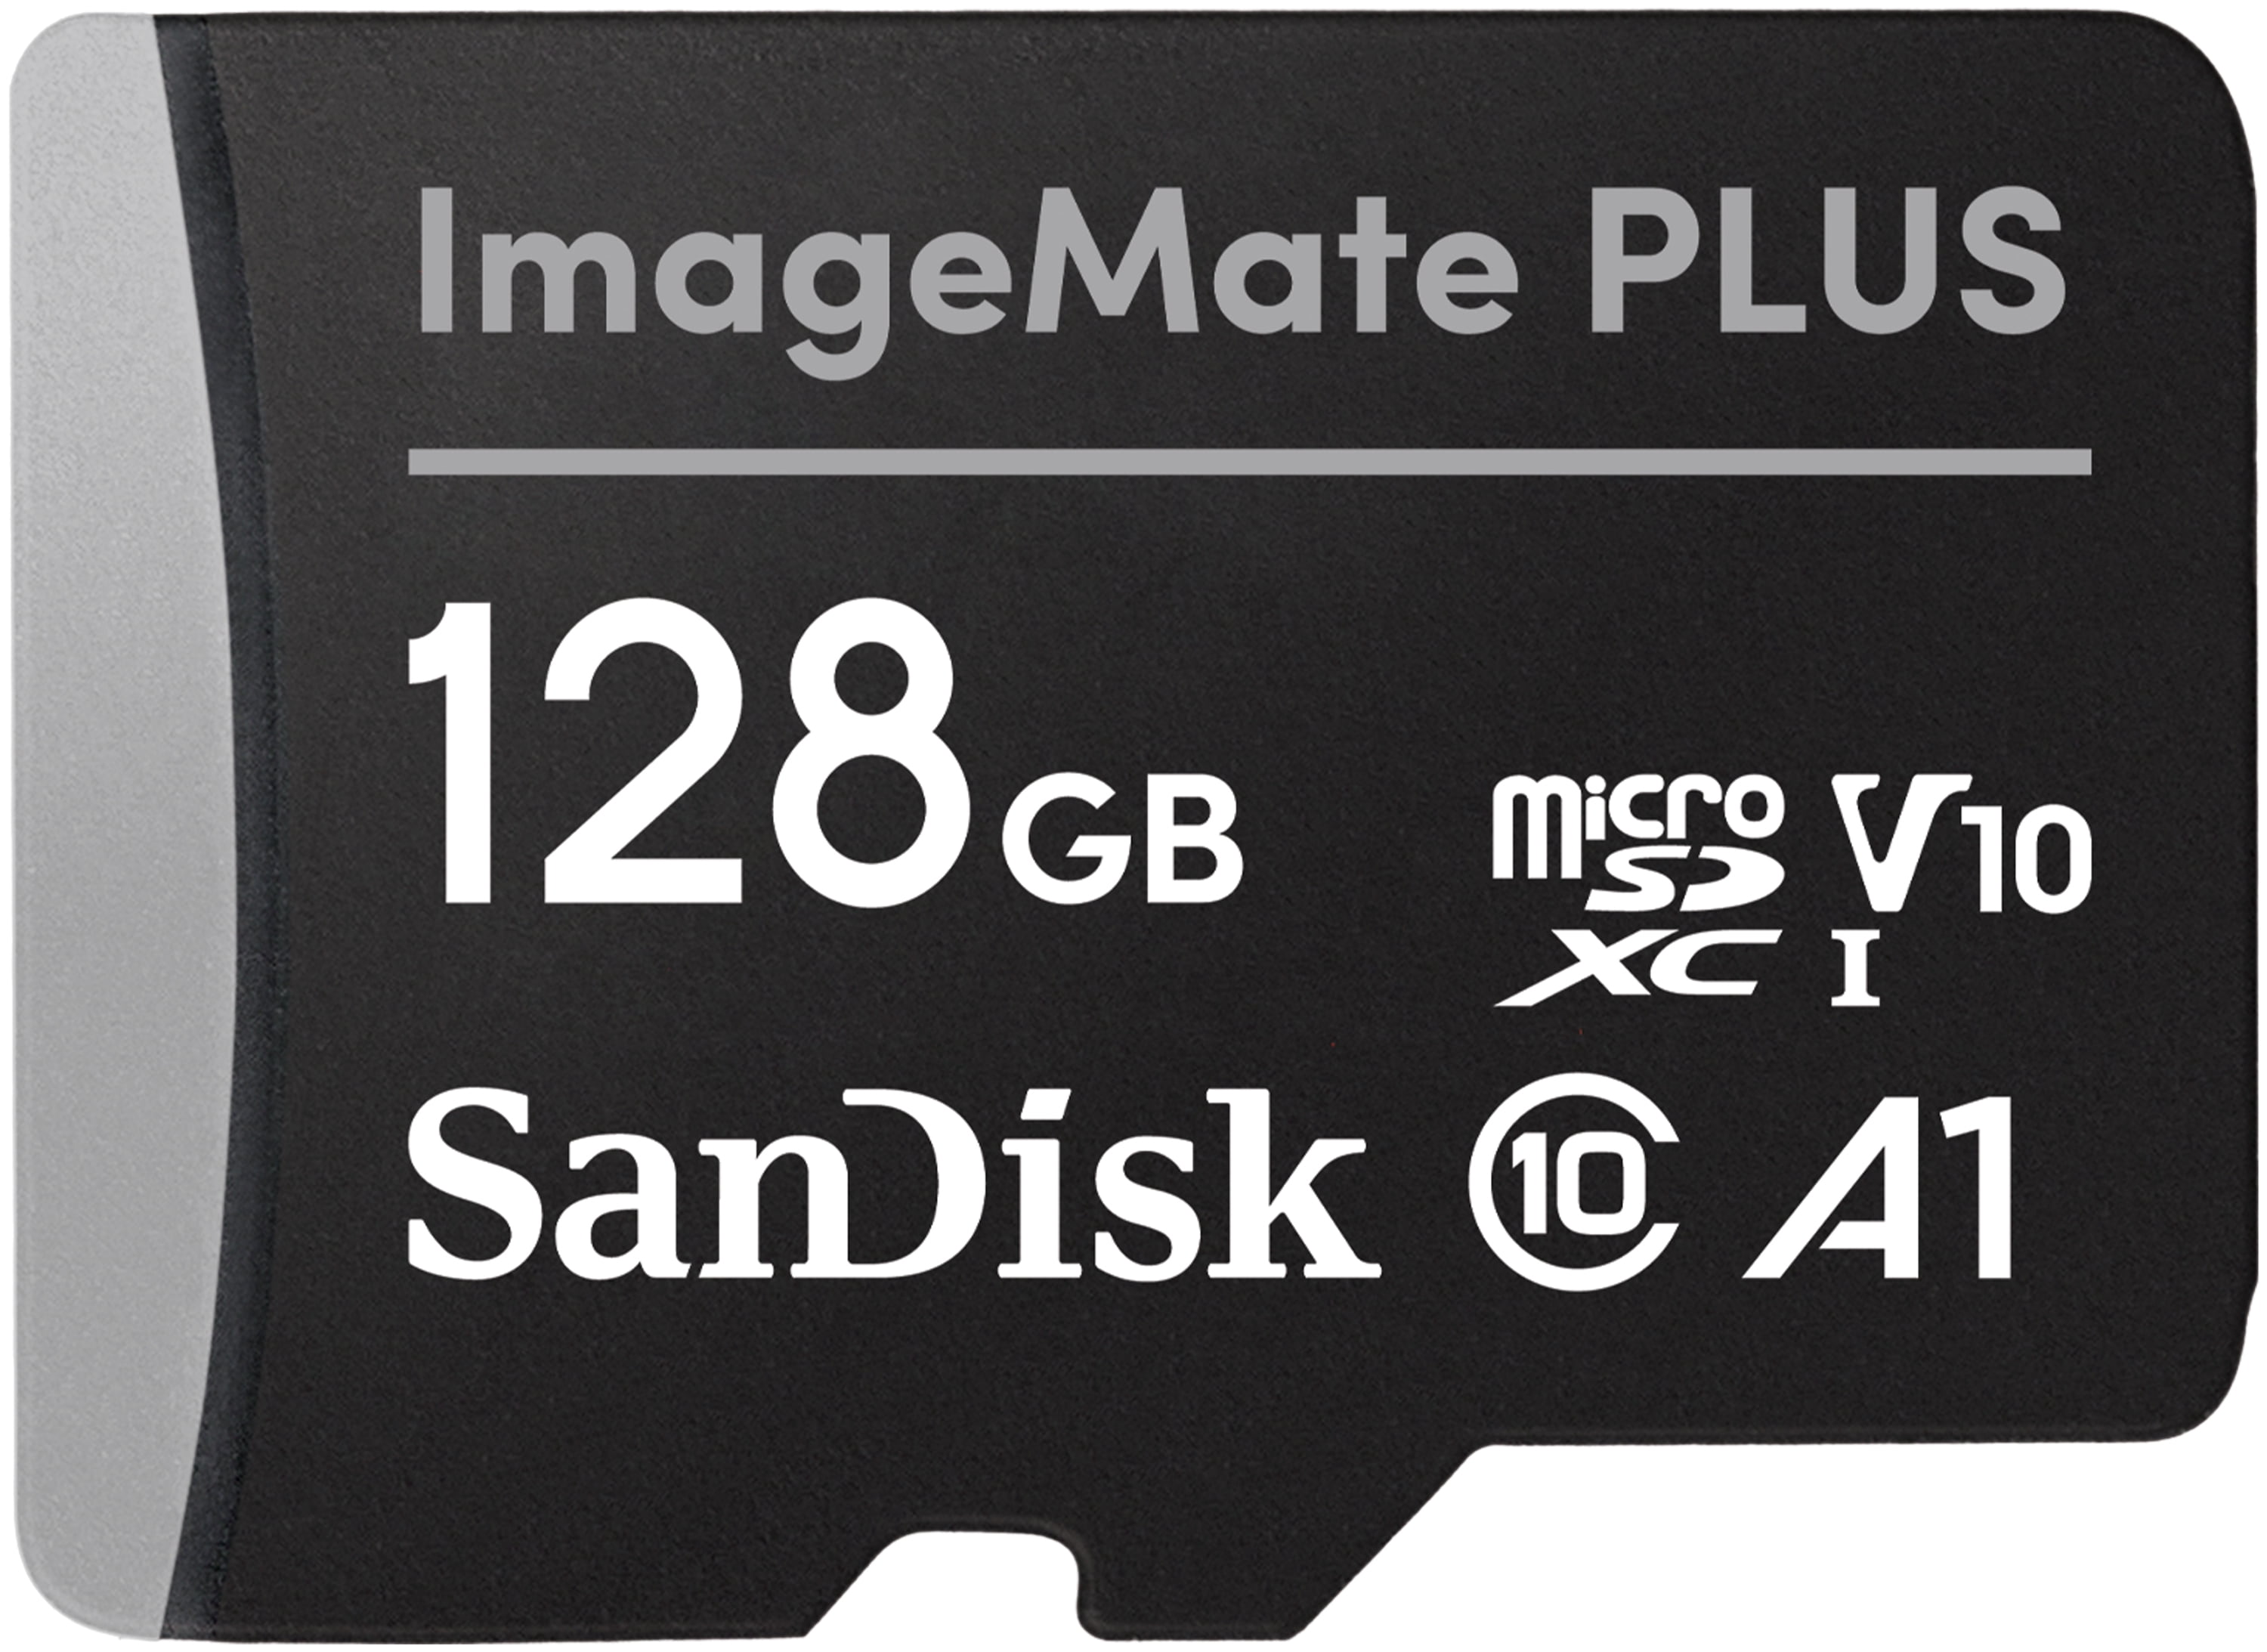 SD Memory Card For Kodak Easyshare M320 Digital Camera